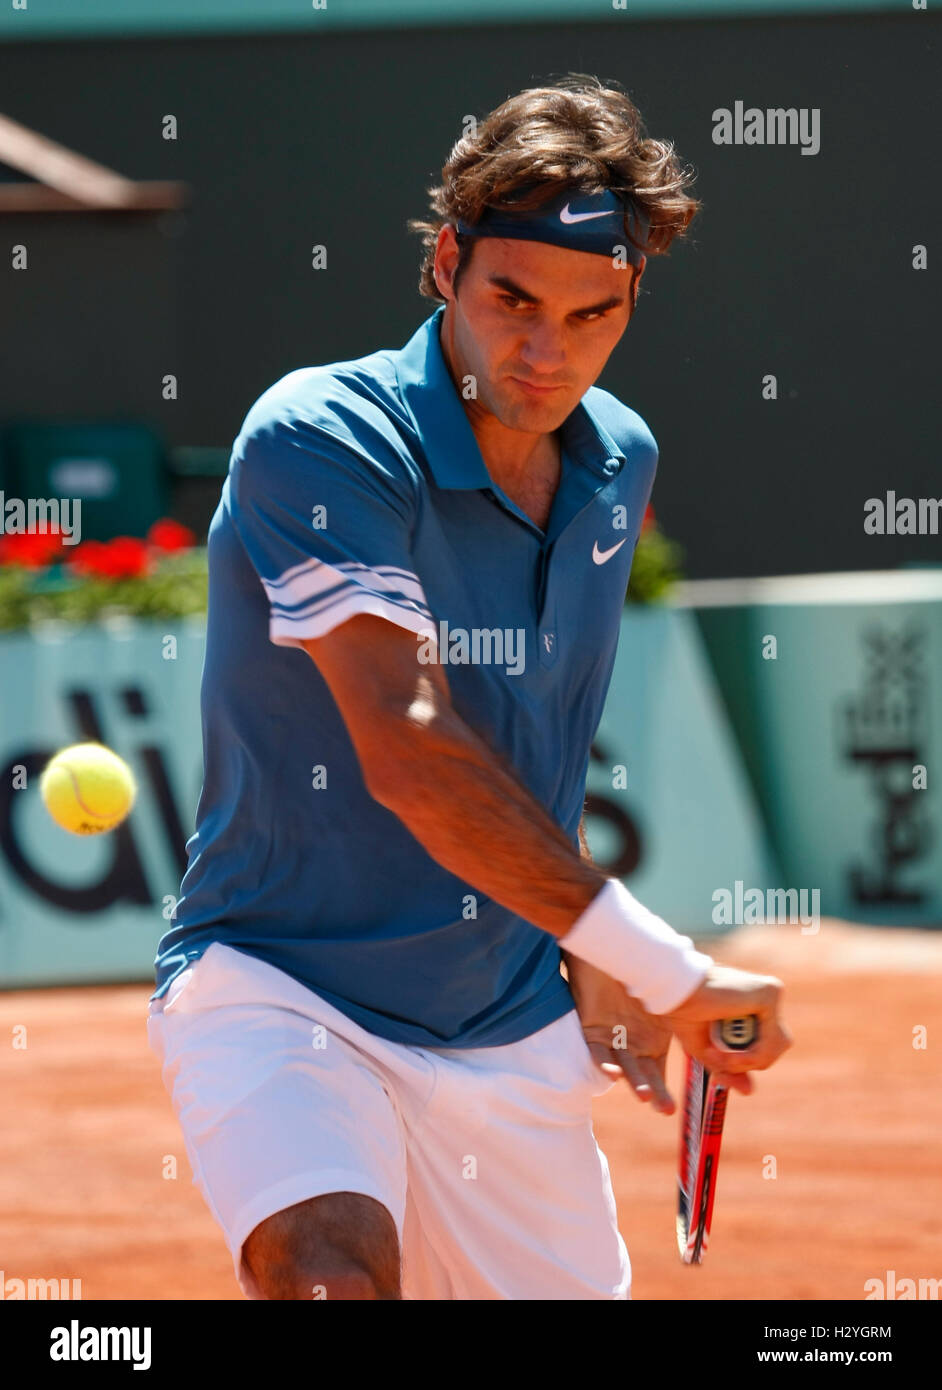 Roger Federer, Suisse, 2010 Open de France, Roland Garros, ITF tournoi du Grand Chelem, Paris, France, Europe Banque D'Images